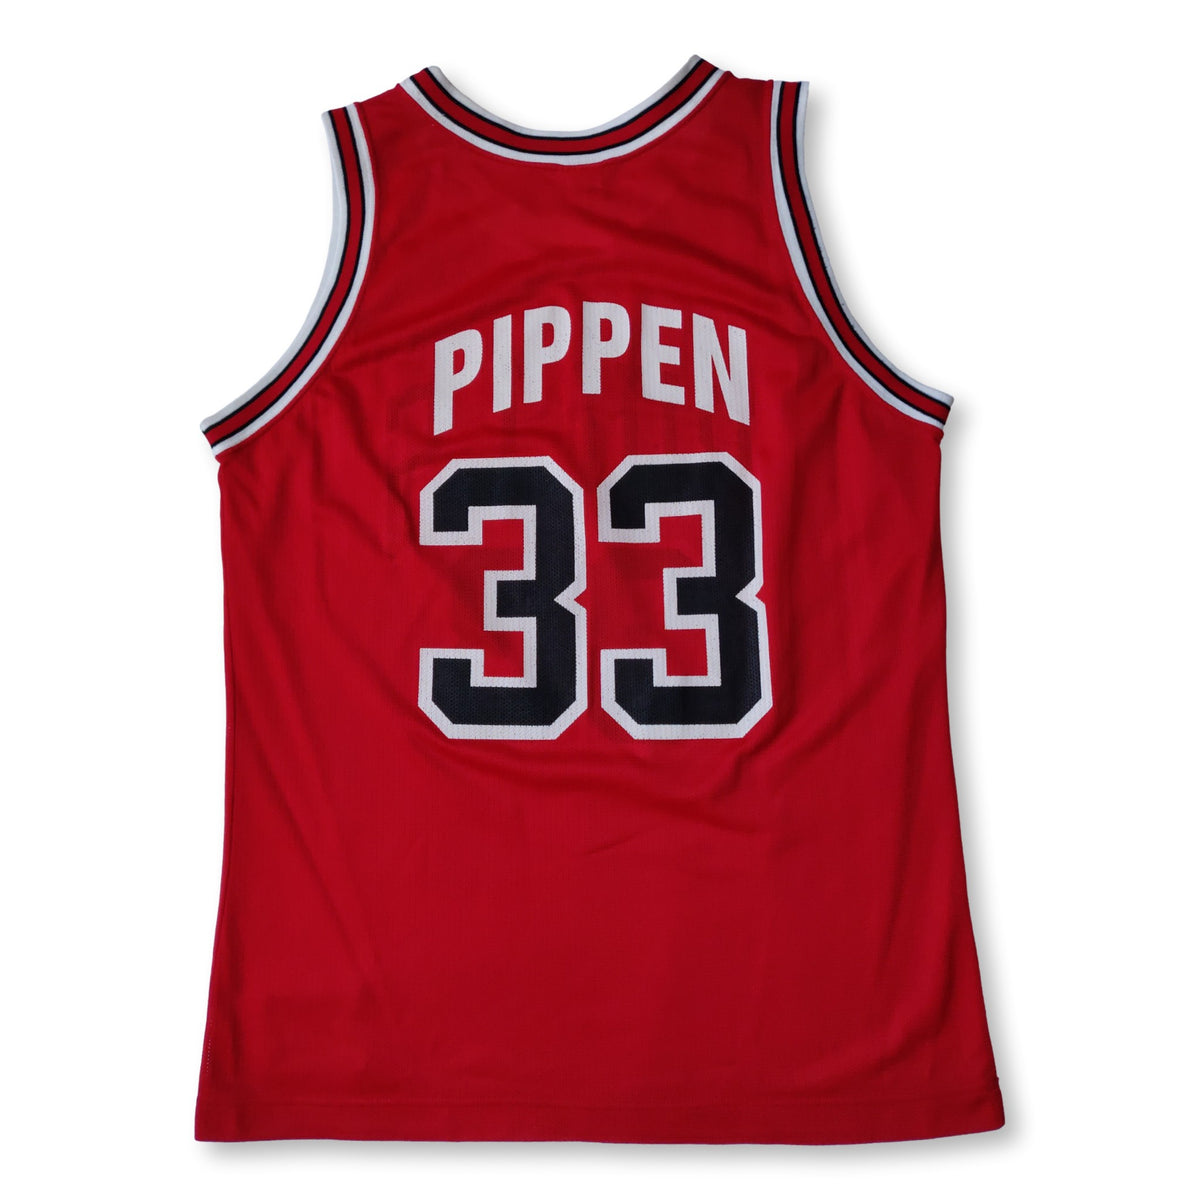 Champion Chicago Bulls NBA *Pippen* Shirt M M